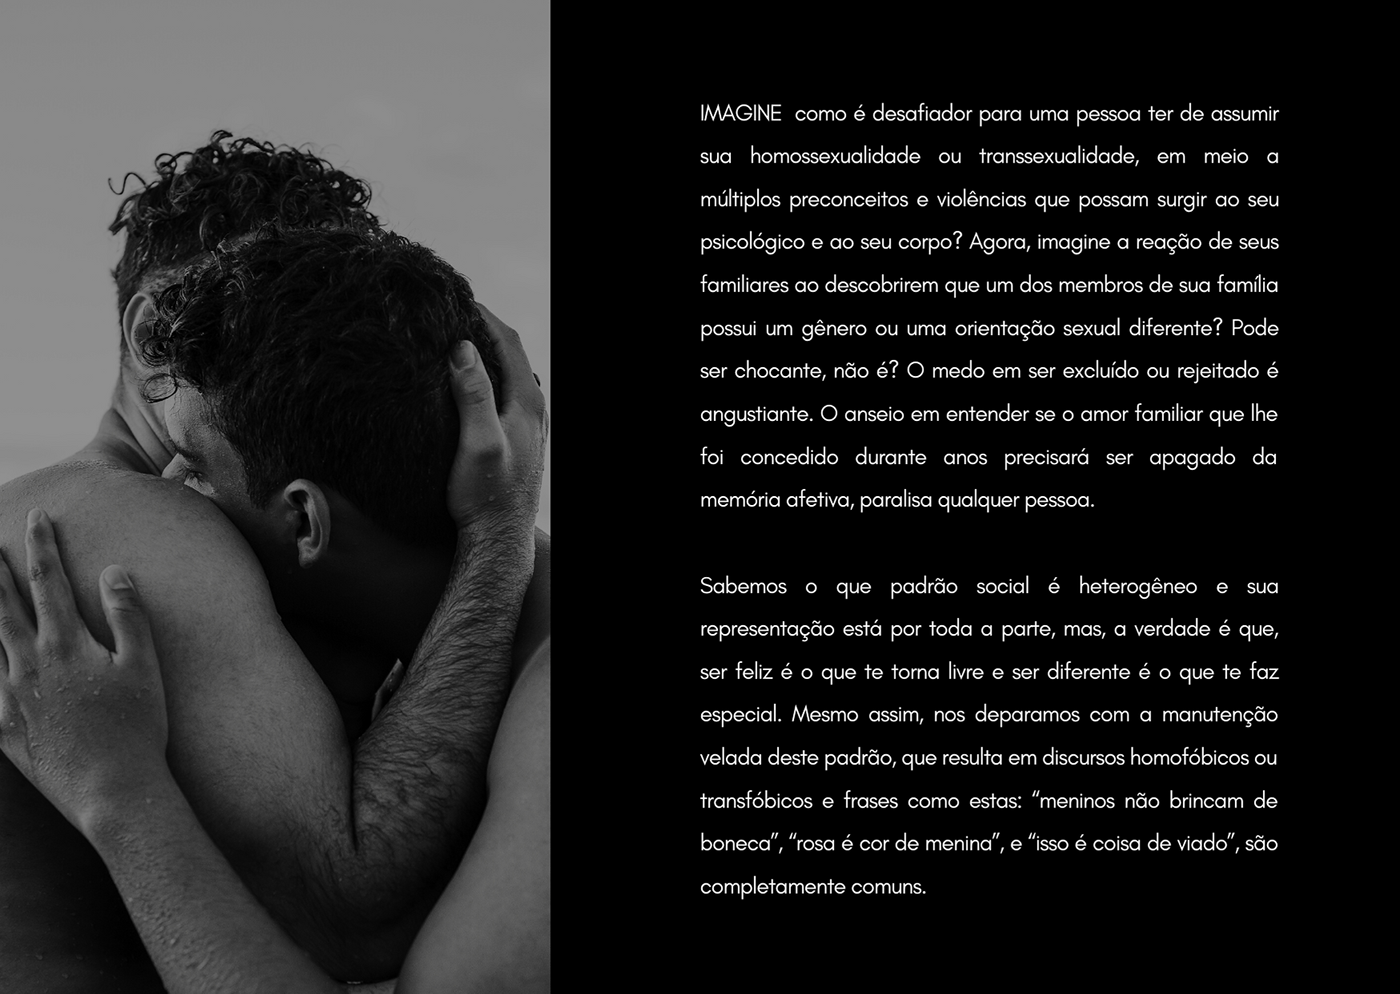 casa 1 gays homossexual lésbica LGBTQ manifesto manifesto de marca ong transsexual